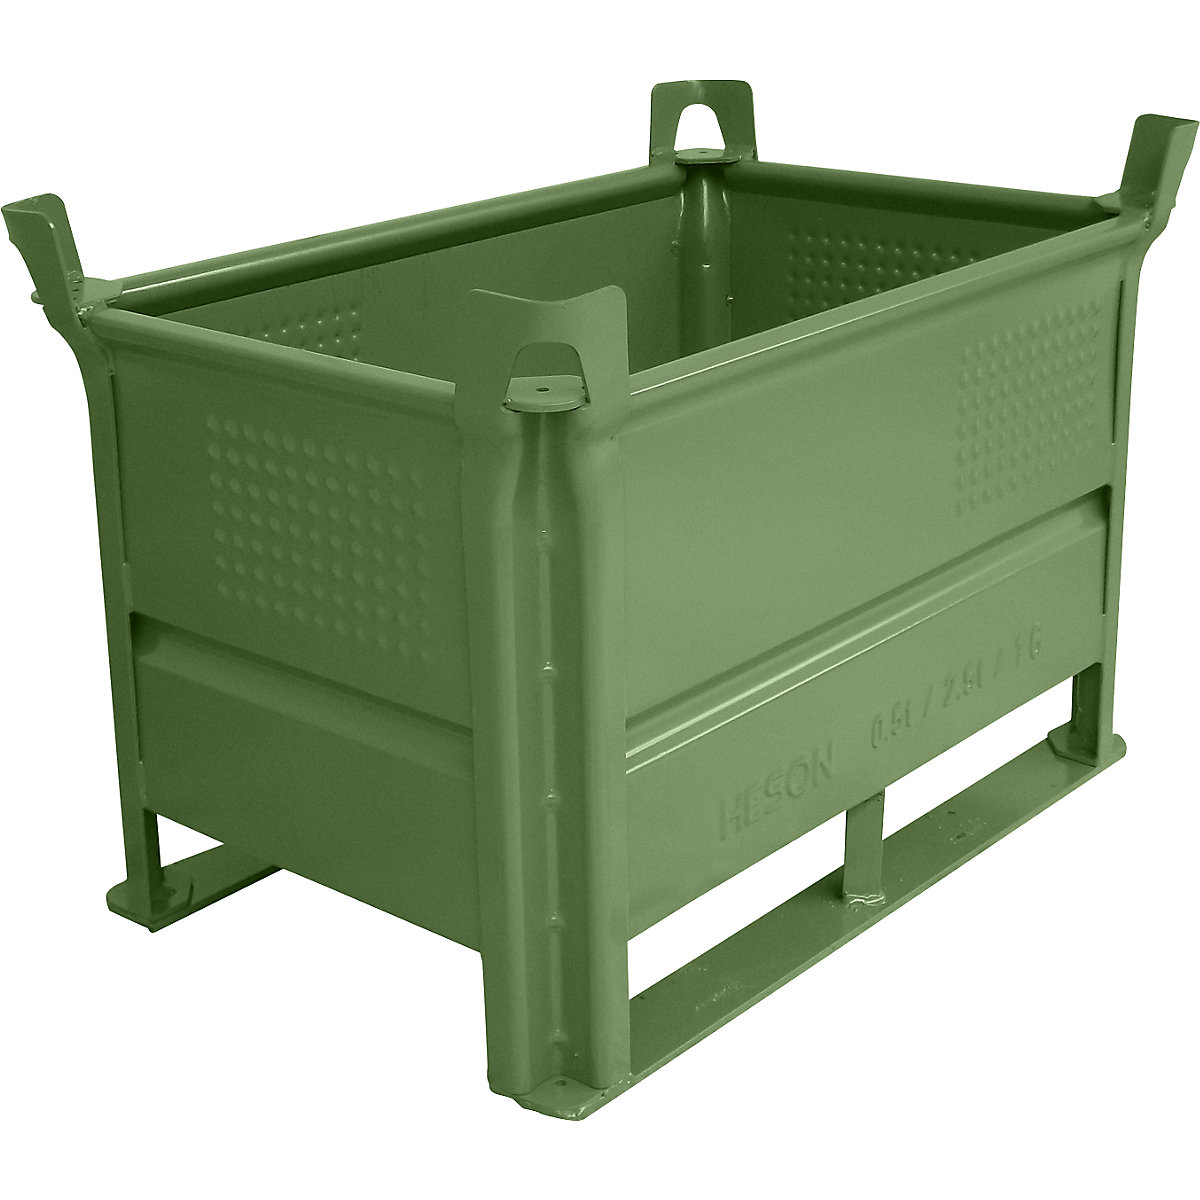 Zaboj za zlaganje z drsniki – Heson, DxŠ 800 x 500 mm, nosilnost 1000 kg, zelena, od 10 kosov-3